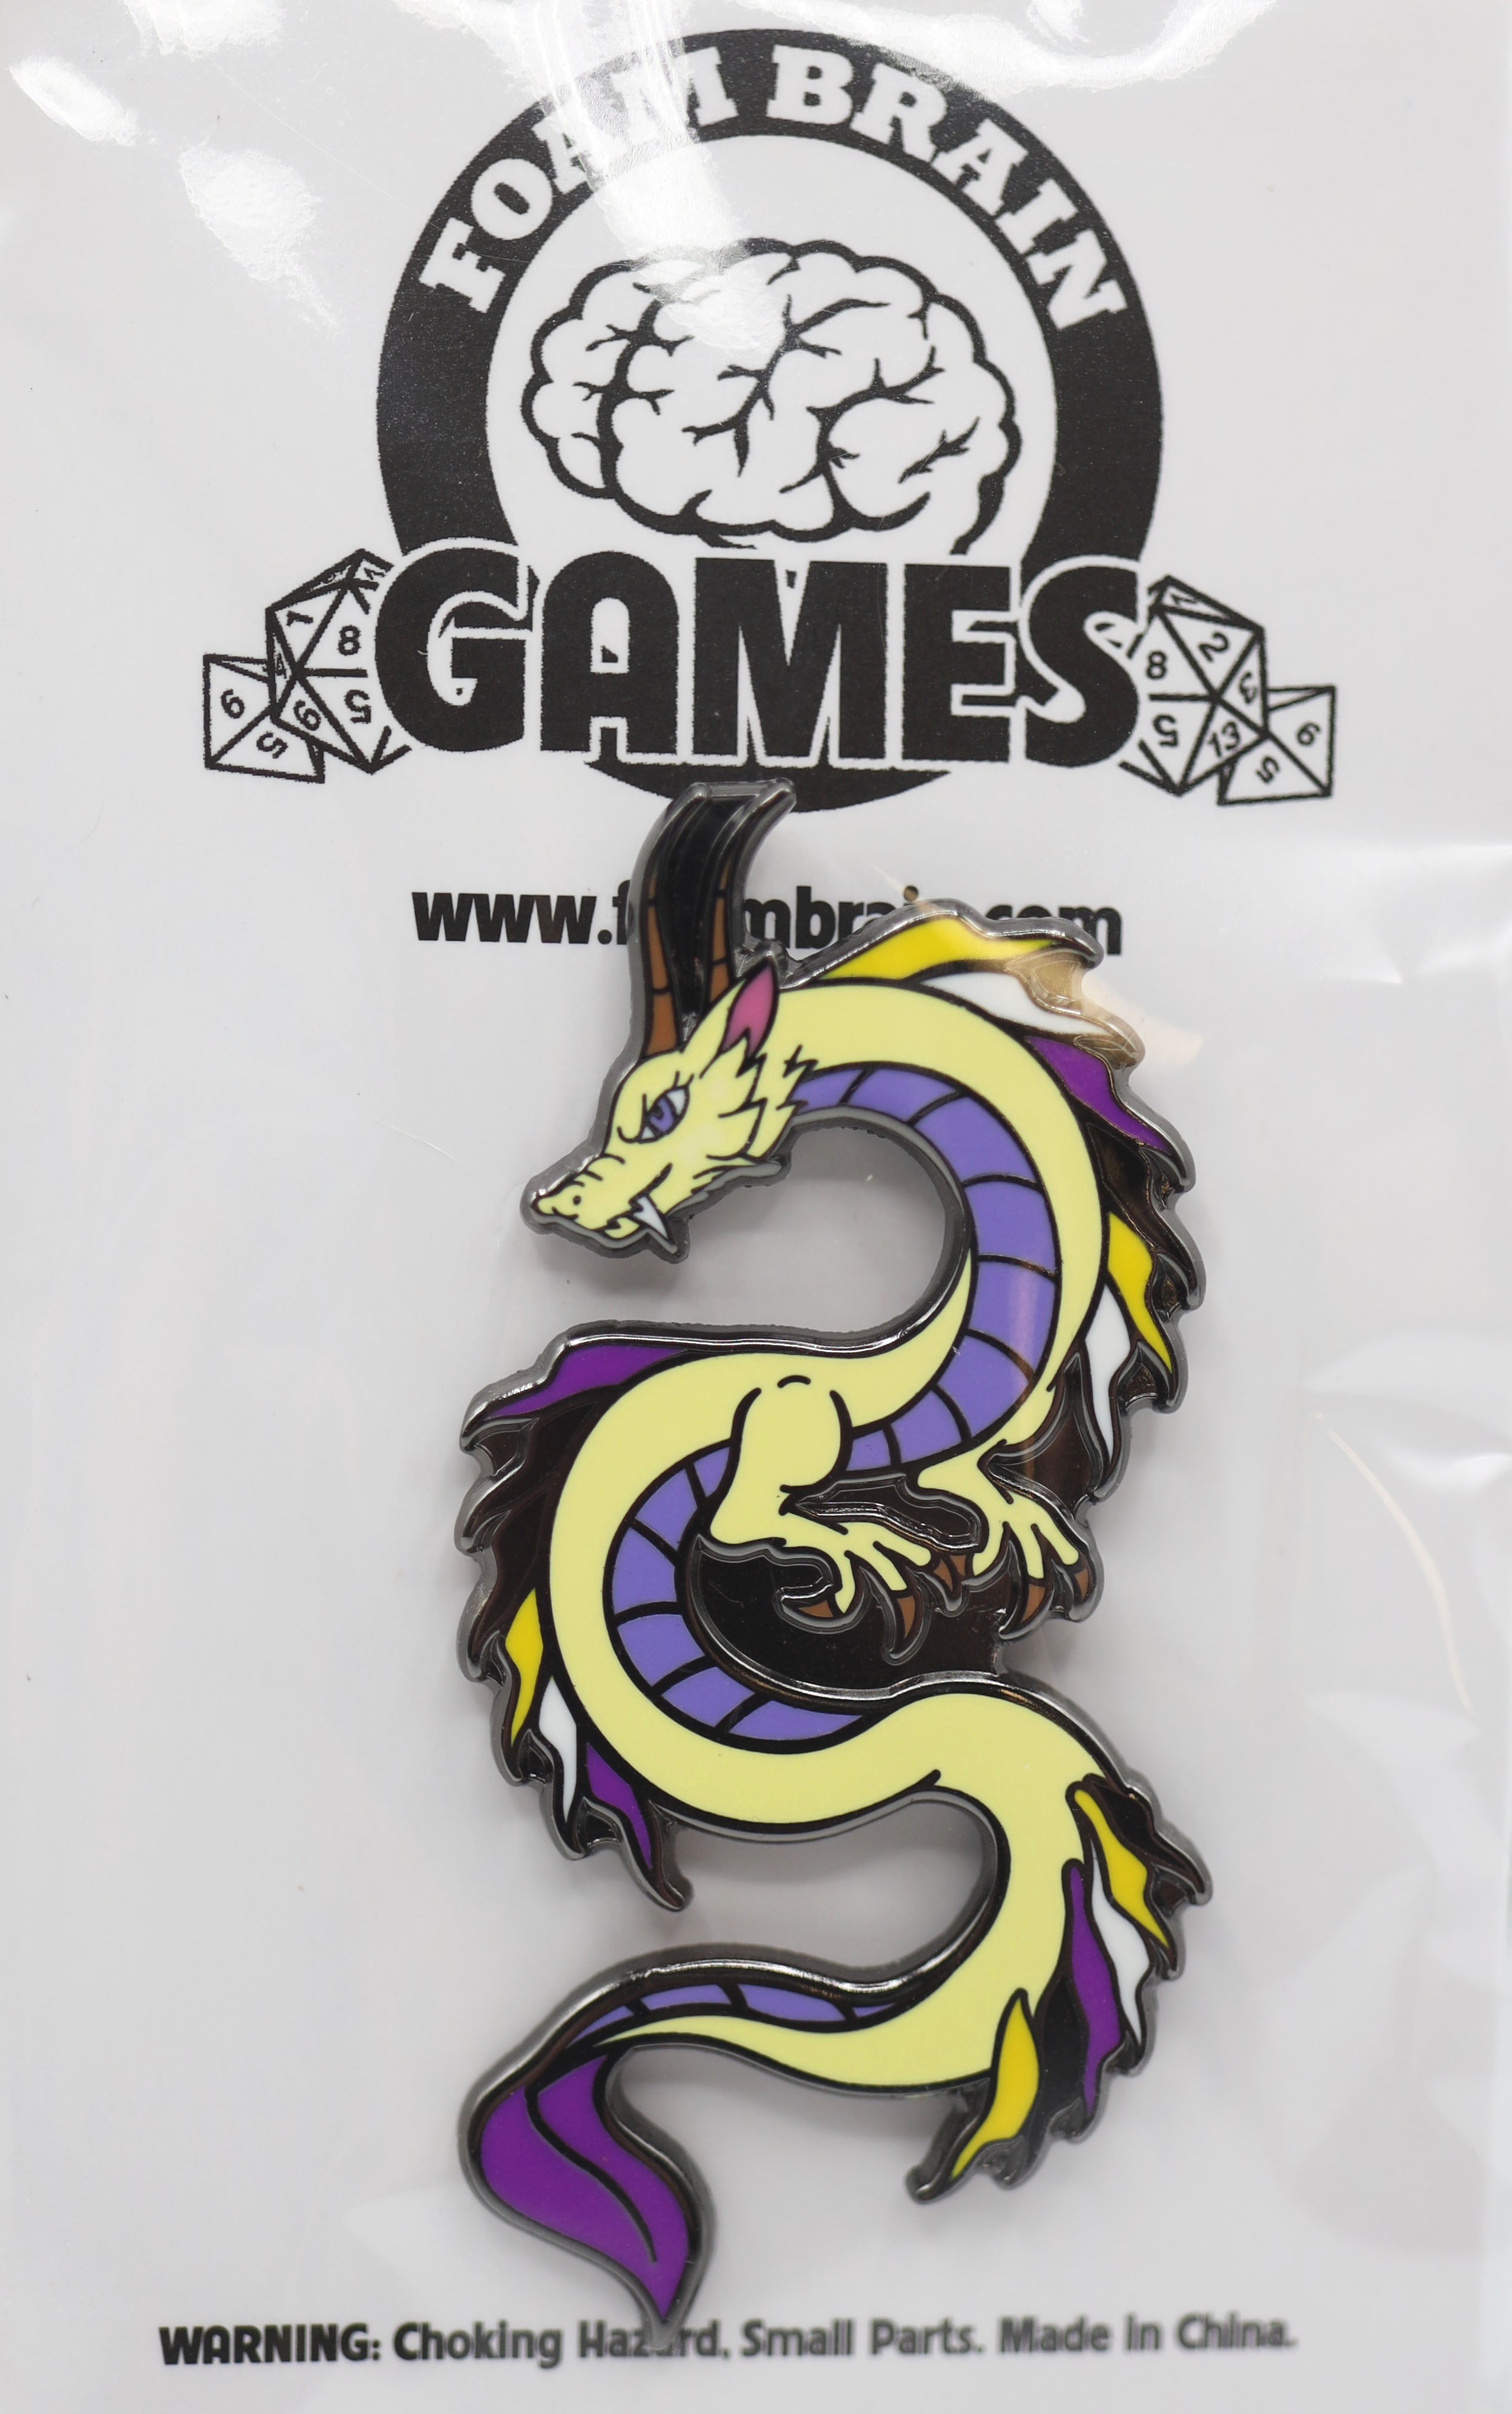 Pride Dragon Pins Enamel Pin Foam Brain Games | D20 Games